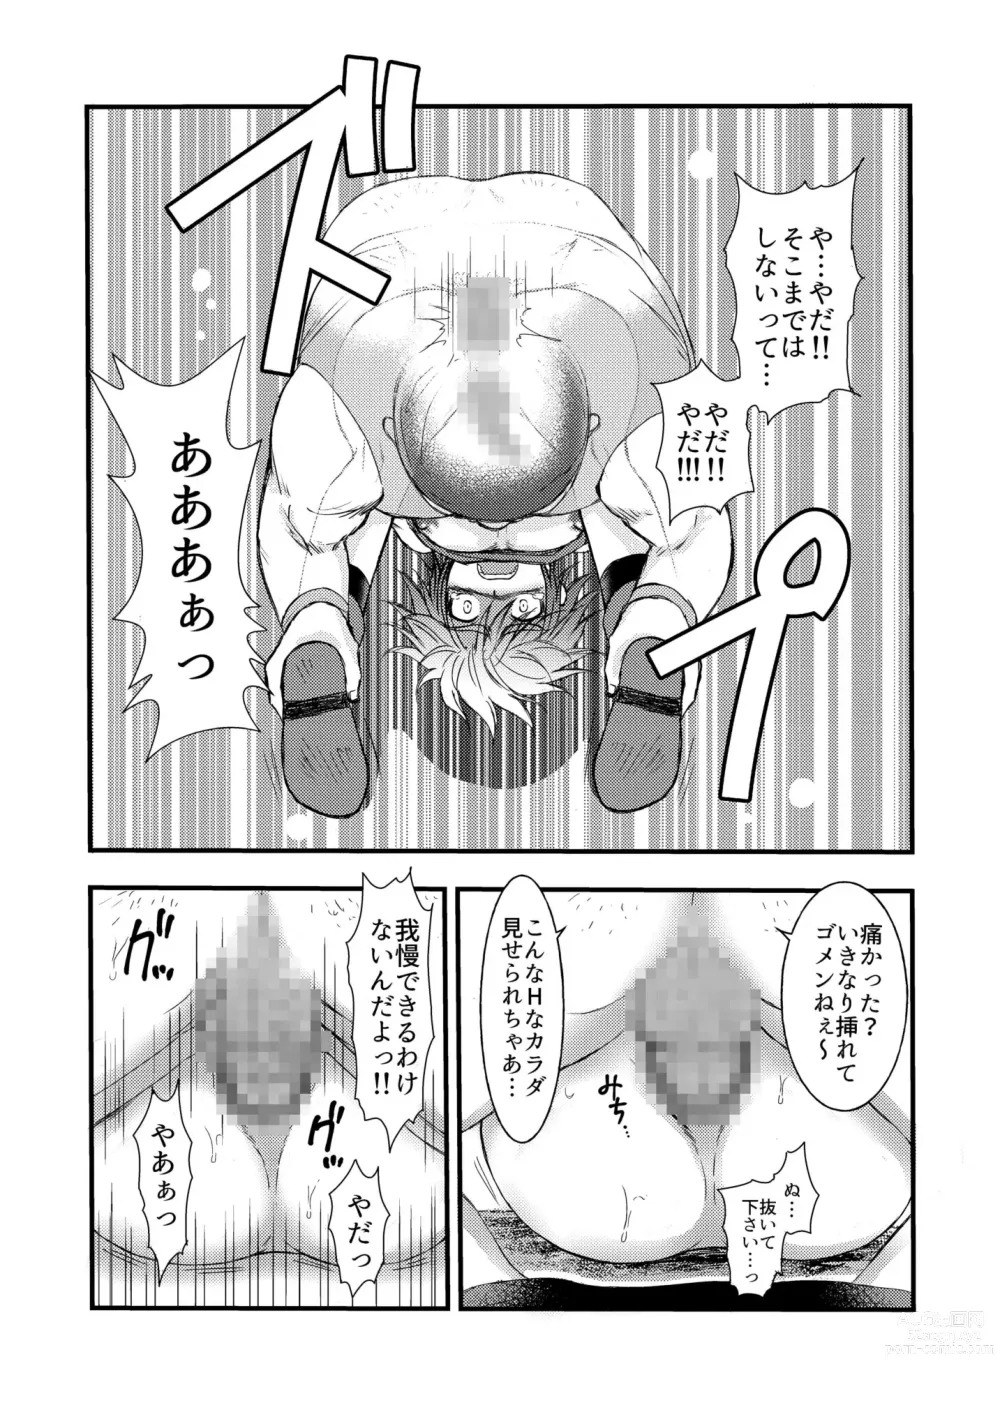 Page 28 of doujinshi Benshoushiro ga Tarinakute